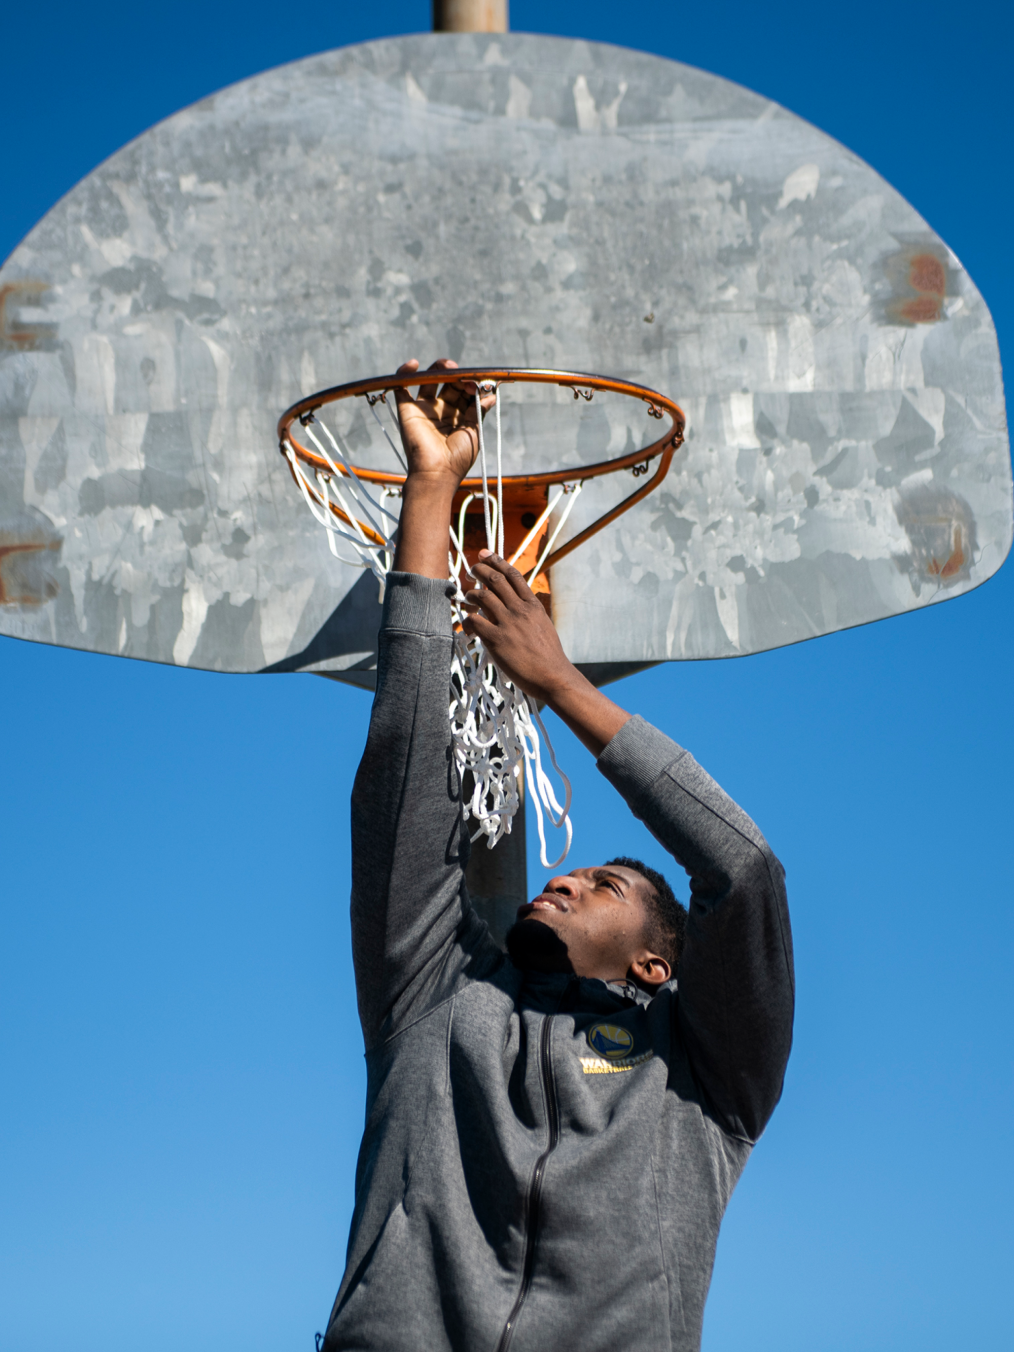 A Black man wearing a sweatshirt holds onto the rim of a basketball net, looking upward. The sky behind is a deep blue.